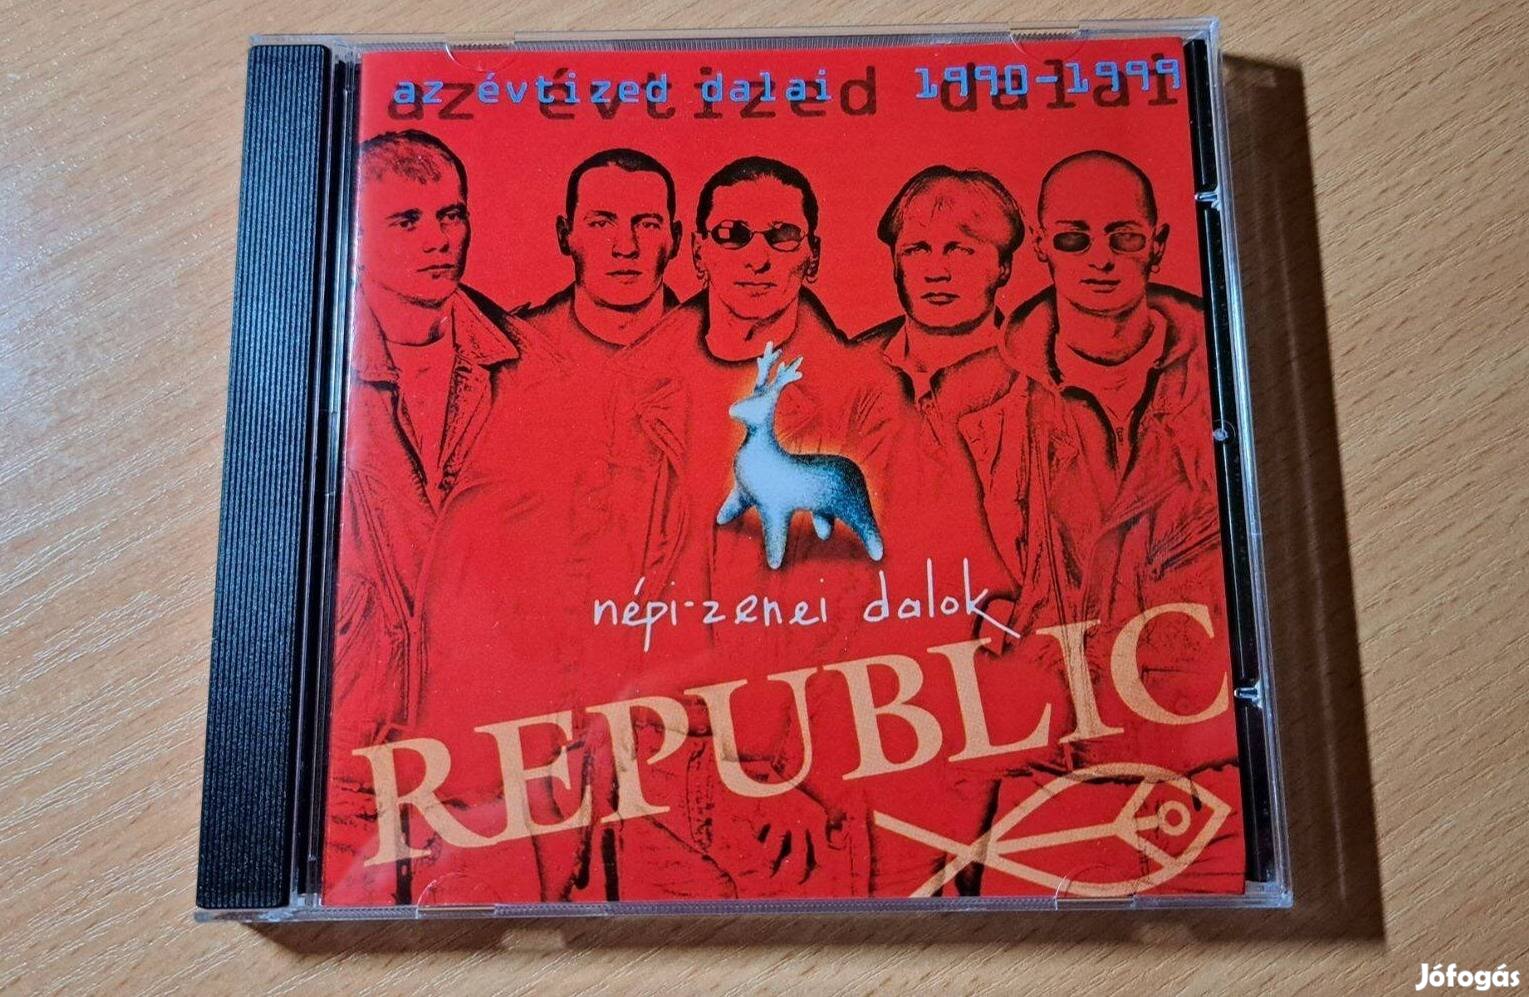 Republic - Az évtized dalai 1990 - 1999 Népzenei dalok - CD